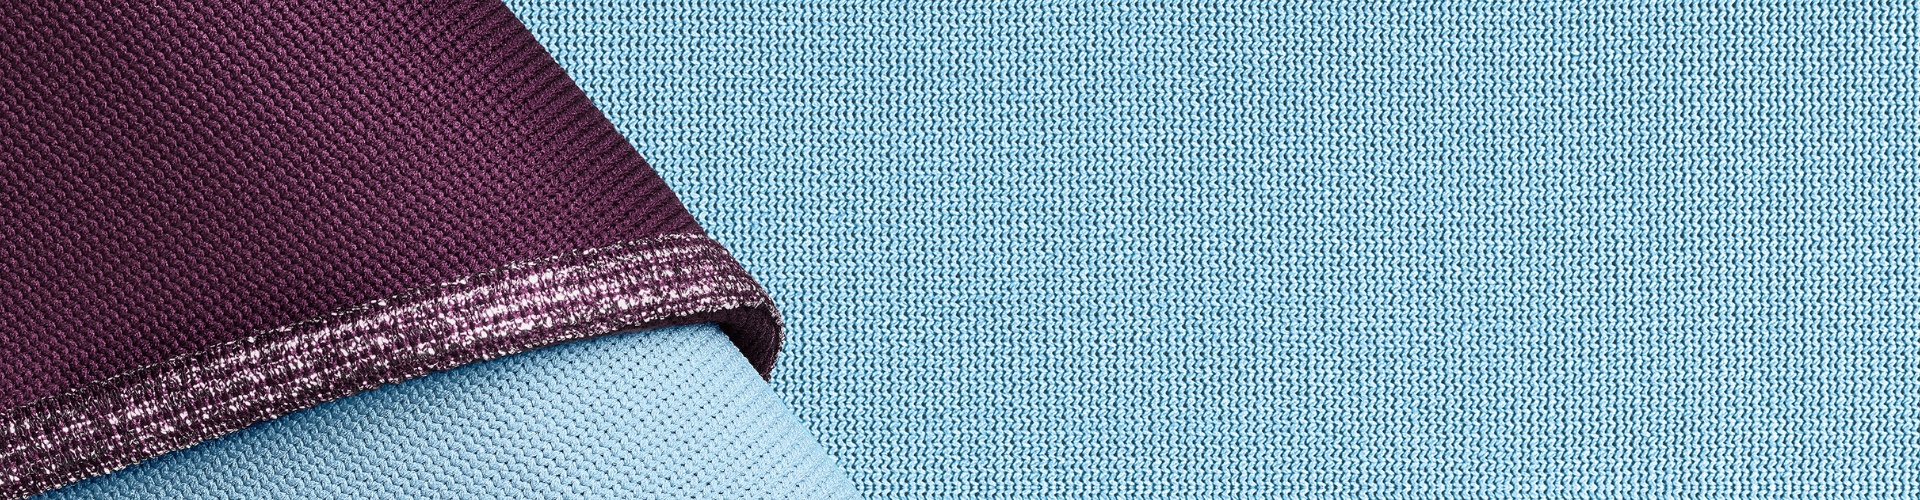 Close Up of Flat Knit Graduated Compression Garments for Leg Lymphedema,  Edema and Lipedema - Powerful Compression Stocking for Stock Image - Image  of lipedema, comfortable: 174864293